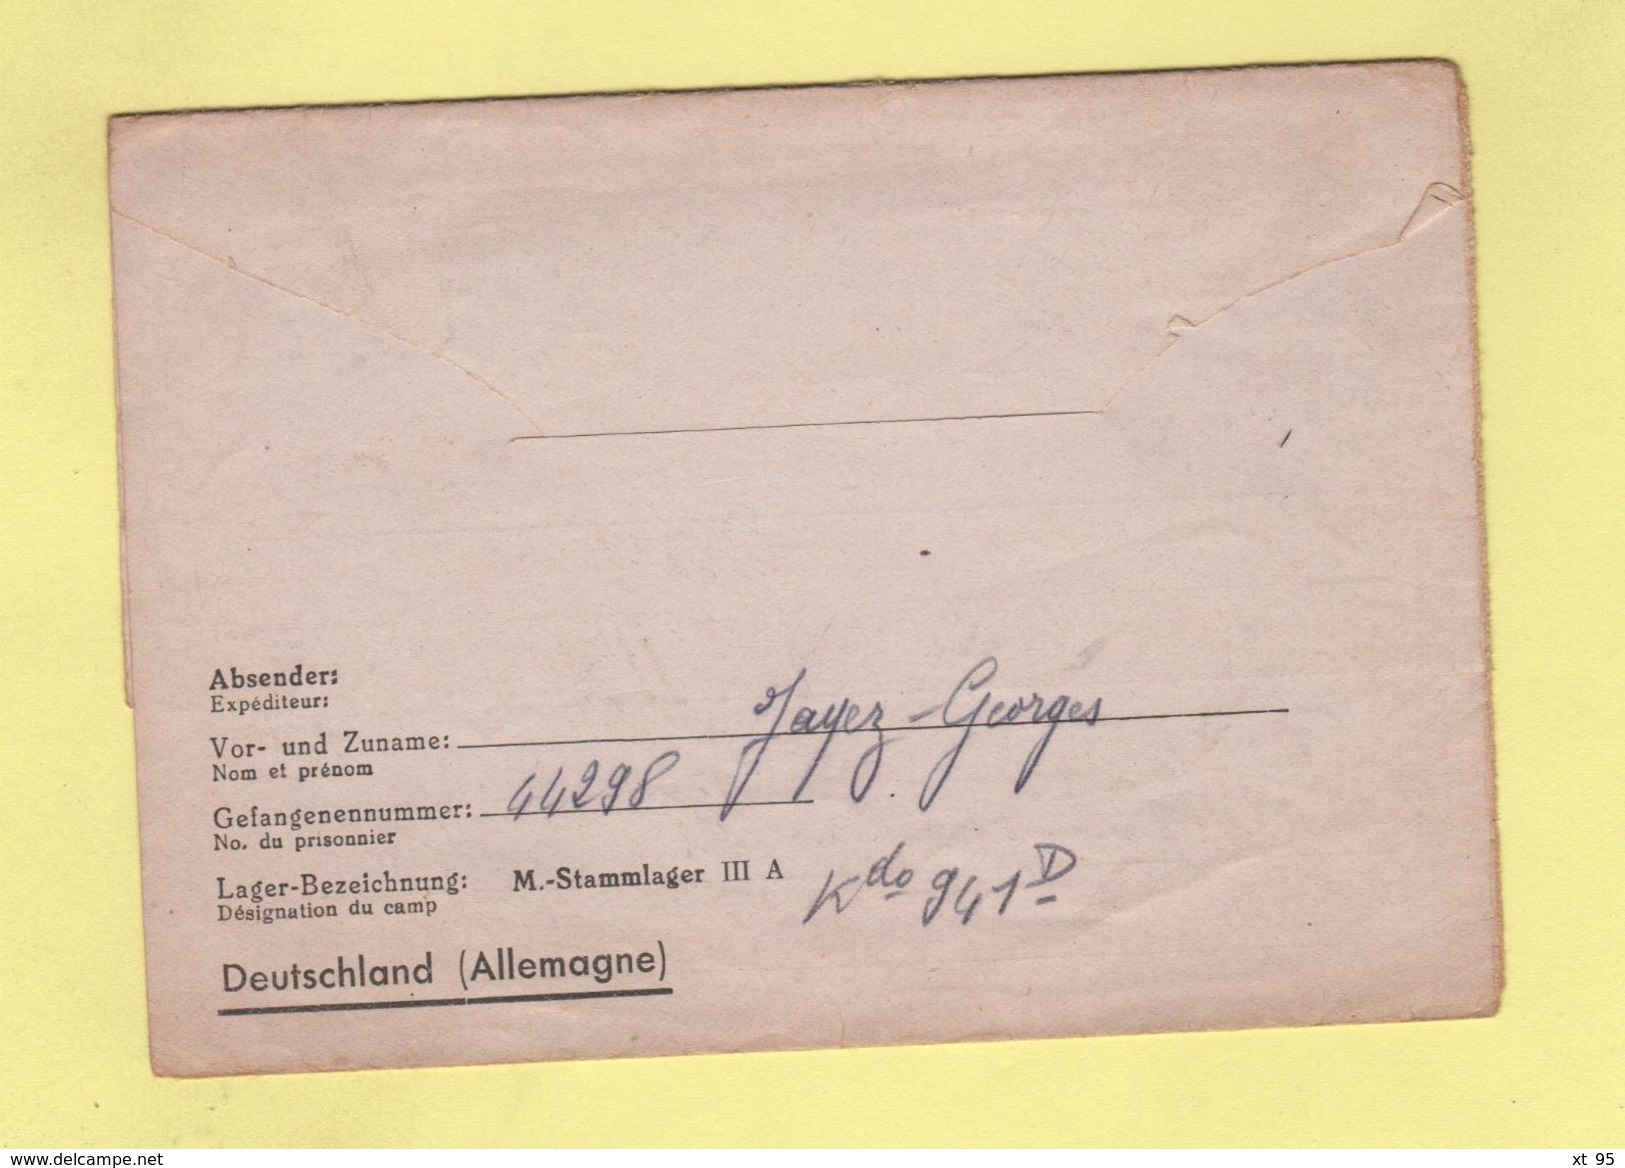 Correspondance De Prisonniers De Guerre - Stalag IIIA - 1942 - WW II